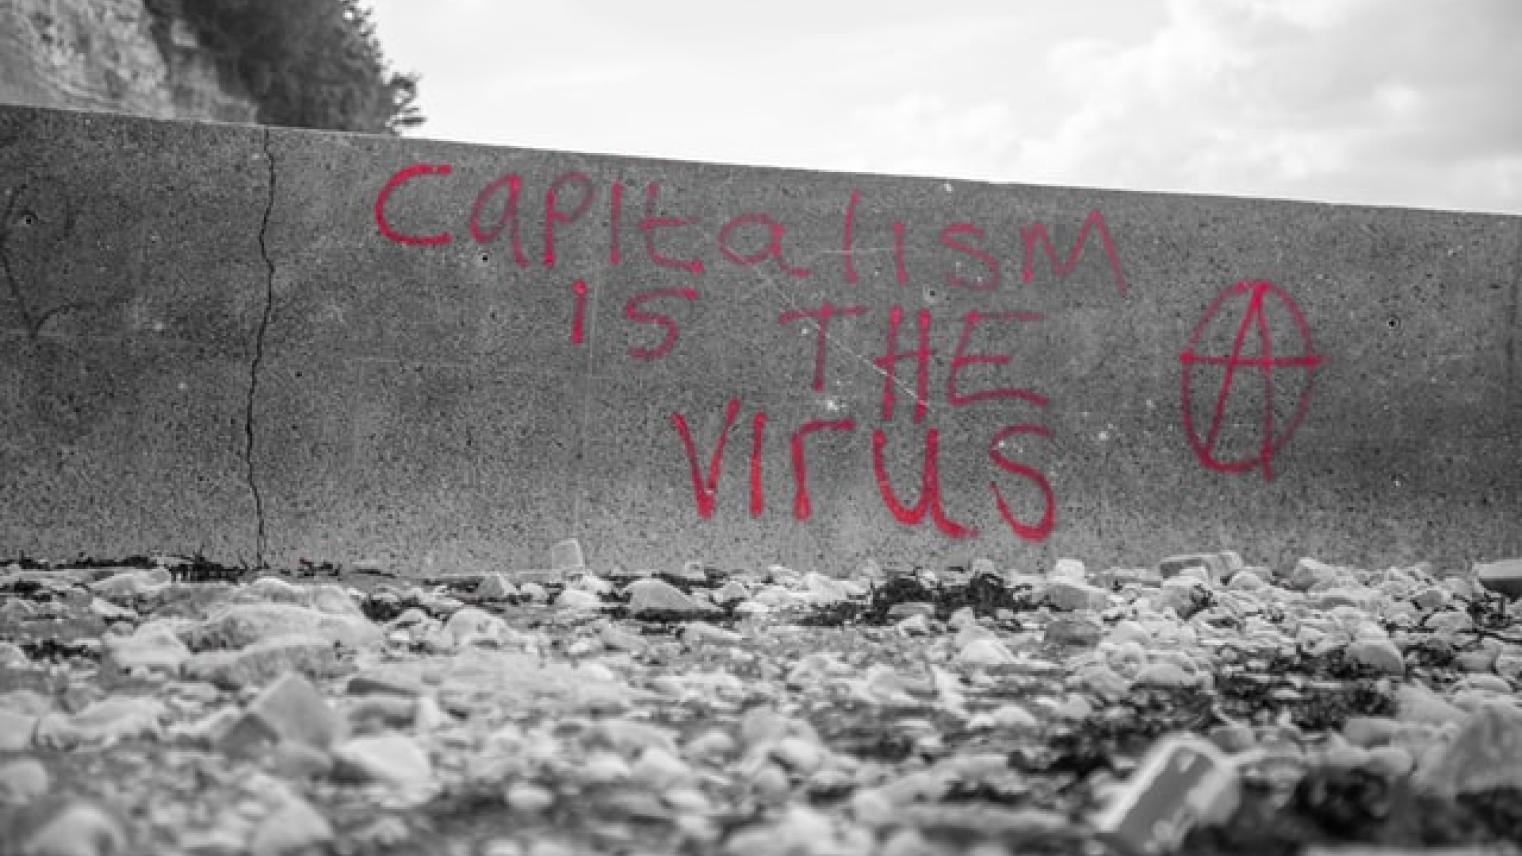 Photo of graffiti “Capitalism is the virus” by Mike Erskine on https://unsplash.com/photos/rrq7MuCoeX4